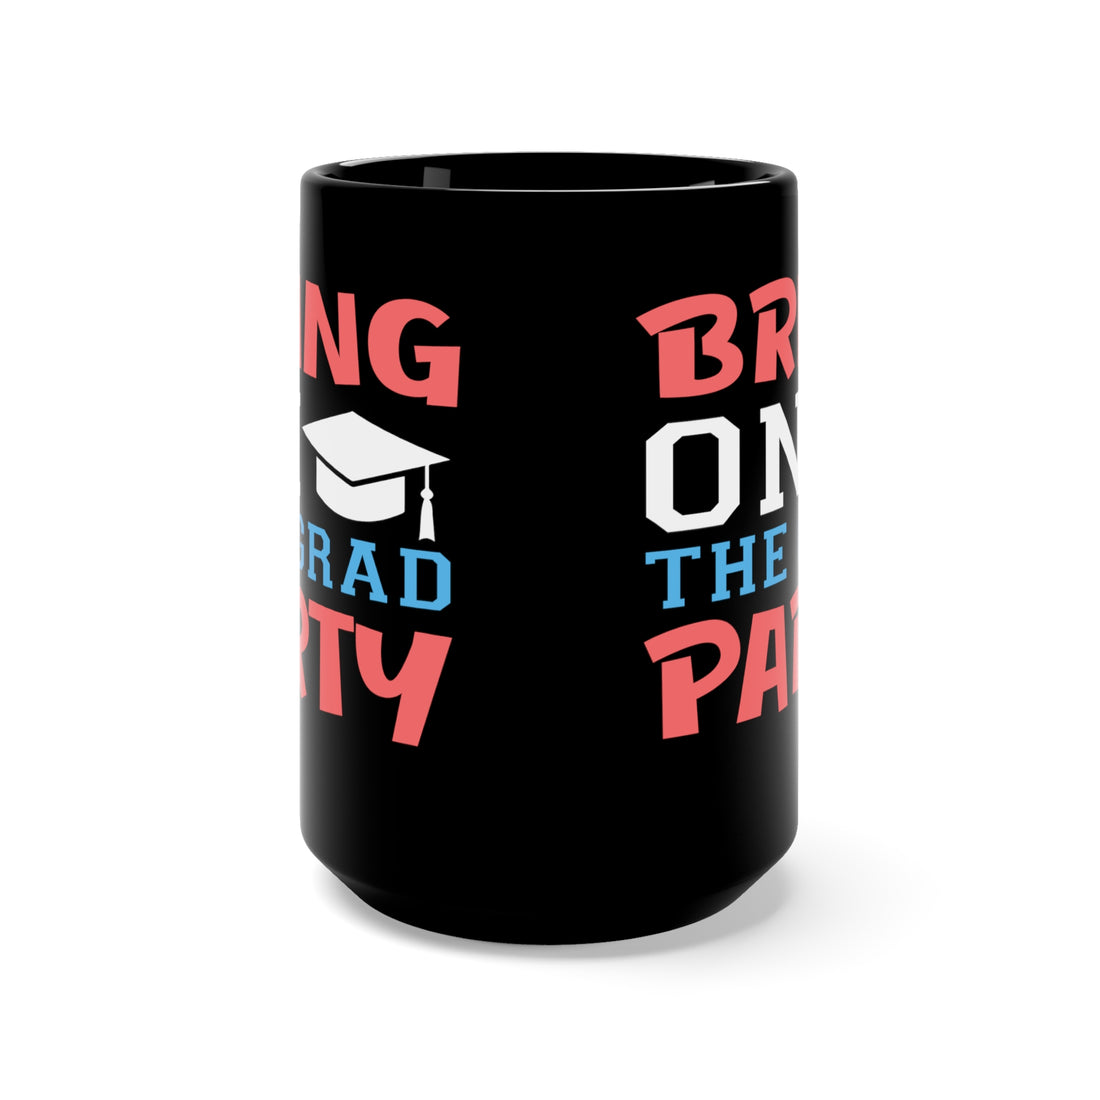 Bring On The Grad Party - Large 15oz Black Mug